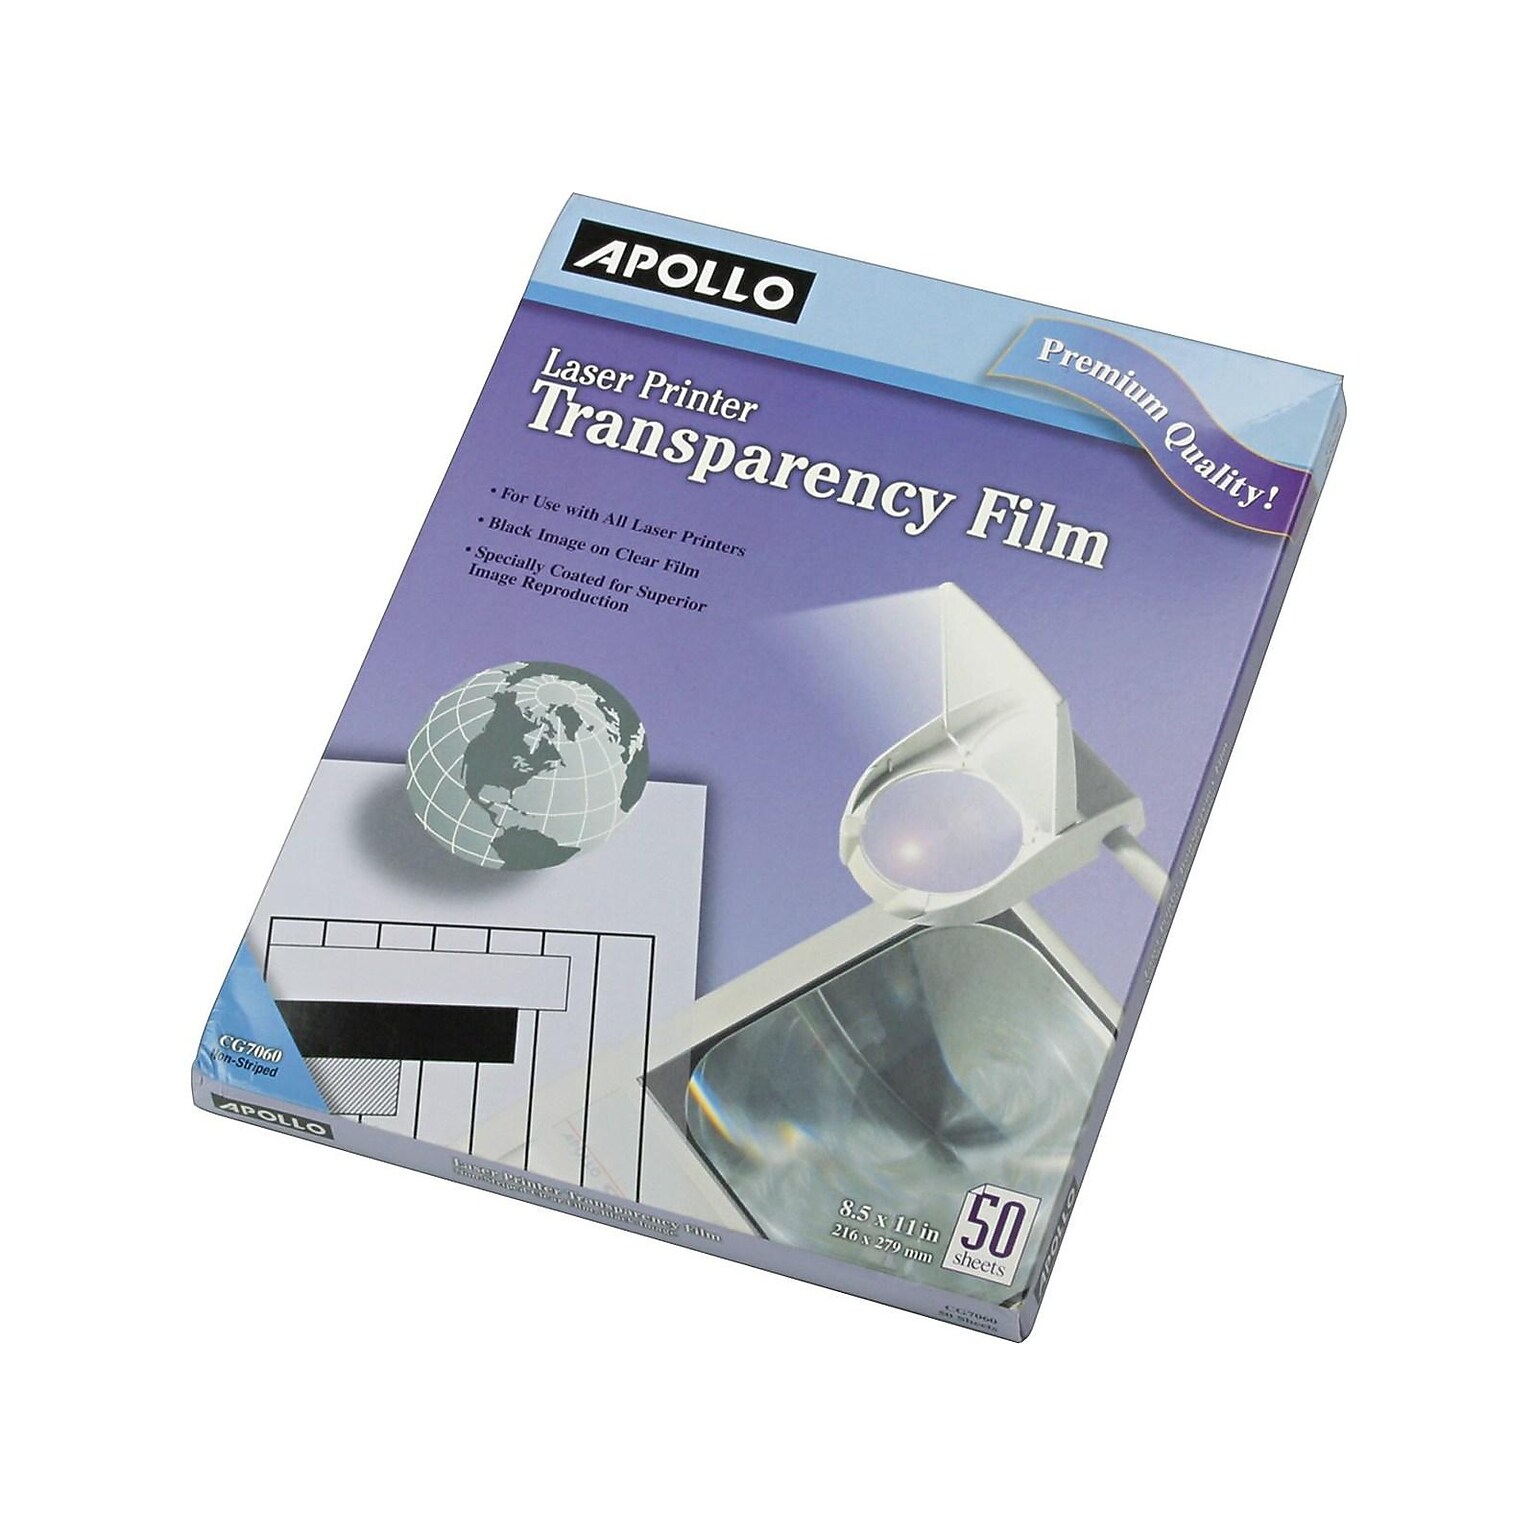 Apollo Laser Printer Transparency Film, 8.5 x 11, 50/Pack (CG7060)